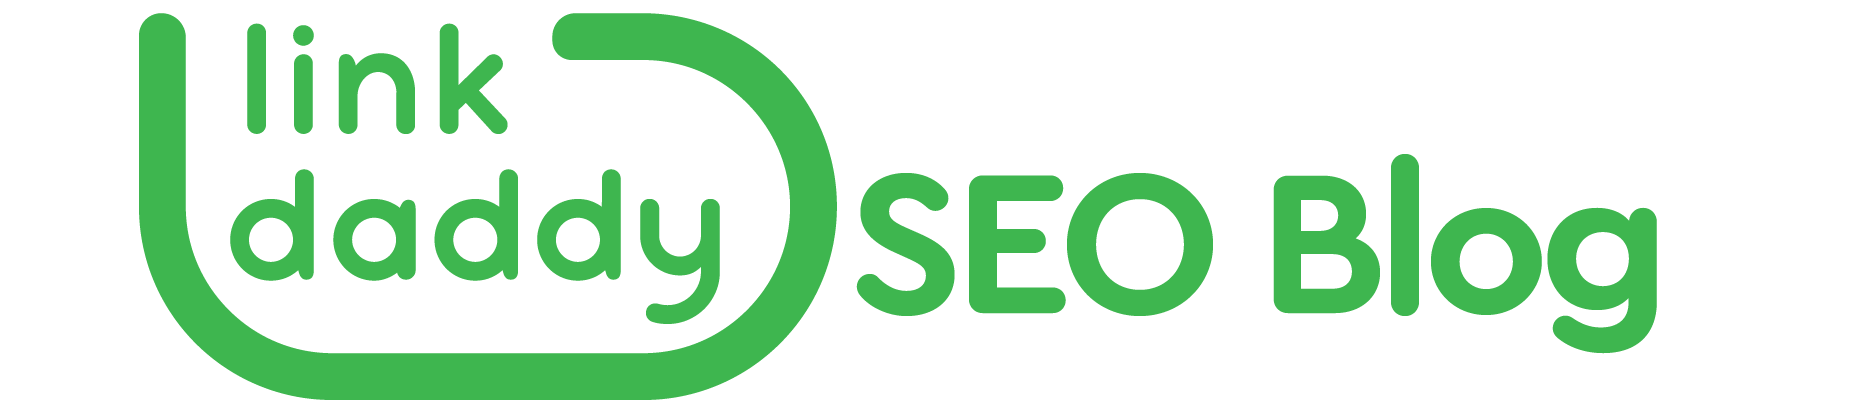 https://storage.googleapis.com/cloudsites/seo-services/867921c52/img/cropped-linkdaddy-seoblog-logo.png